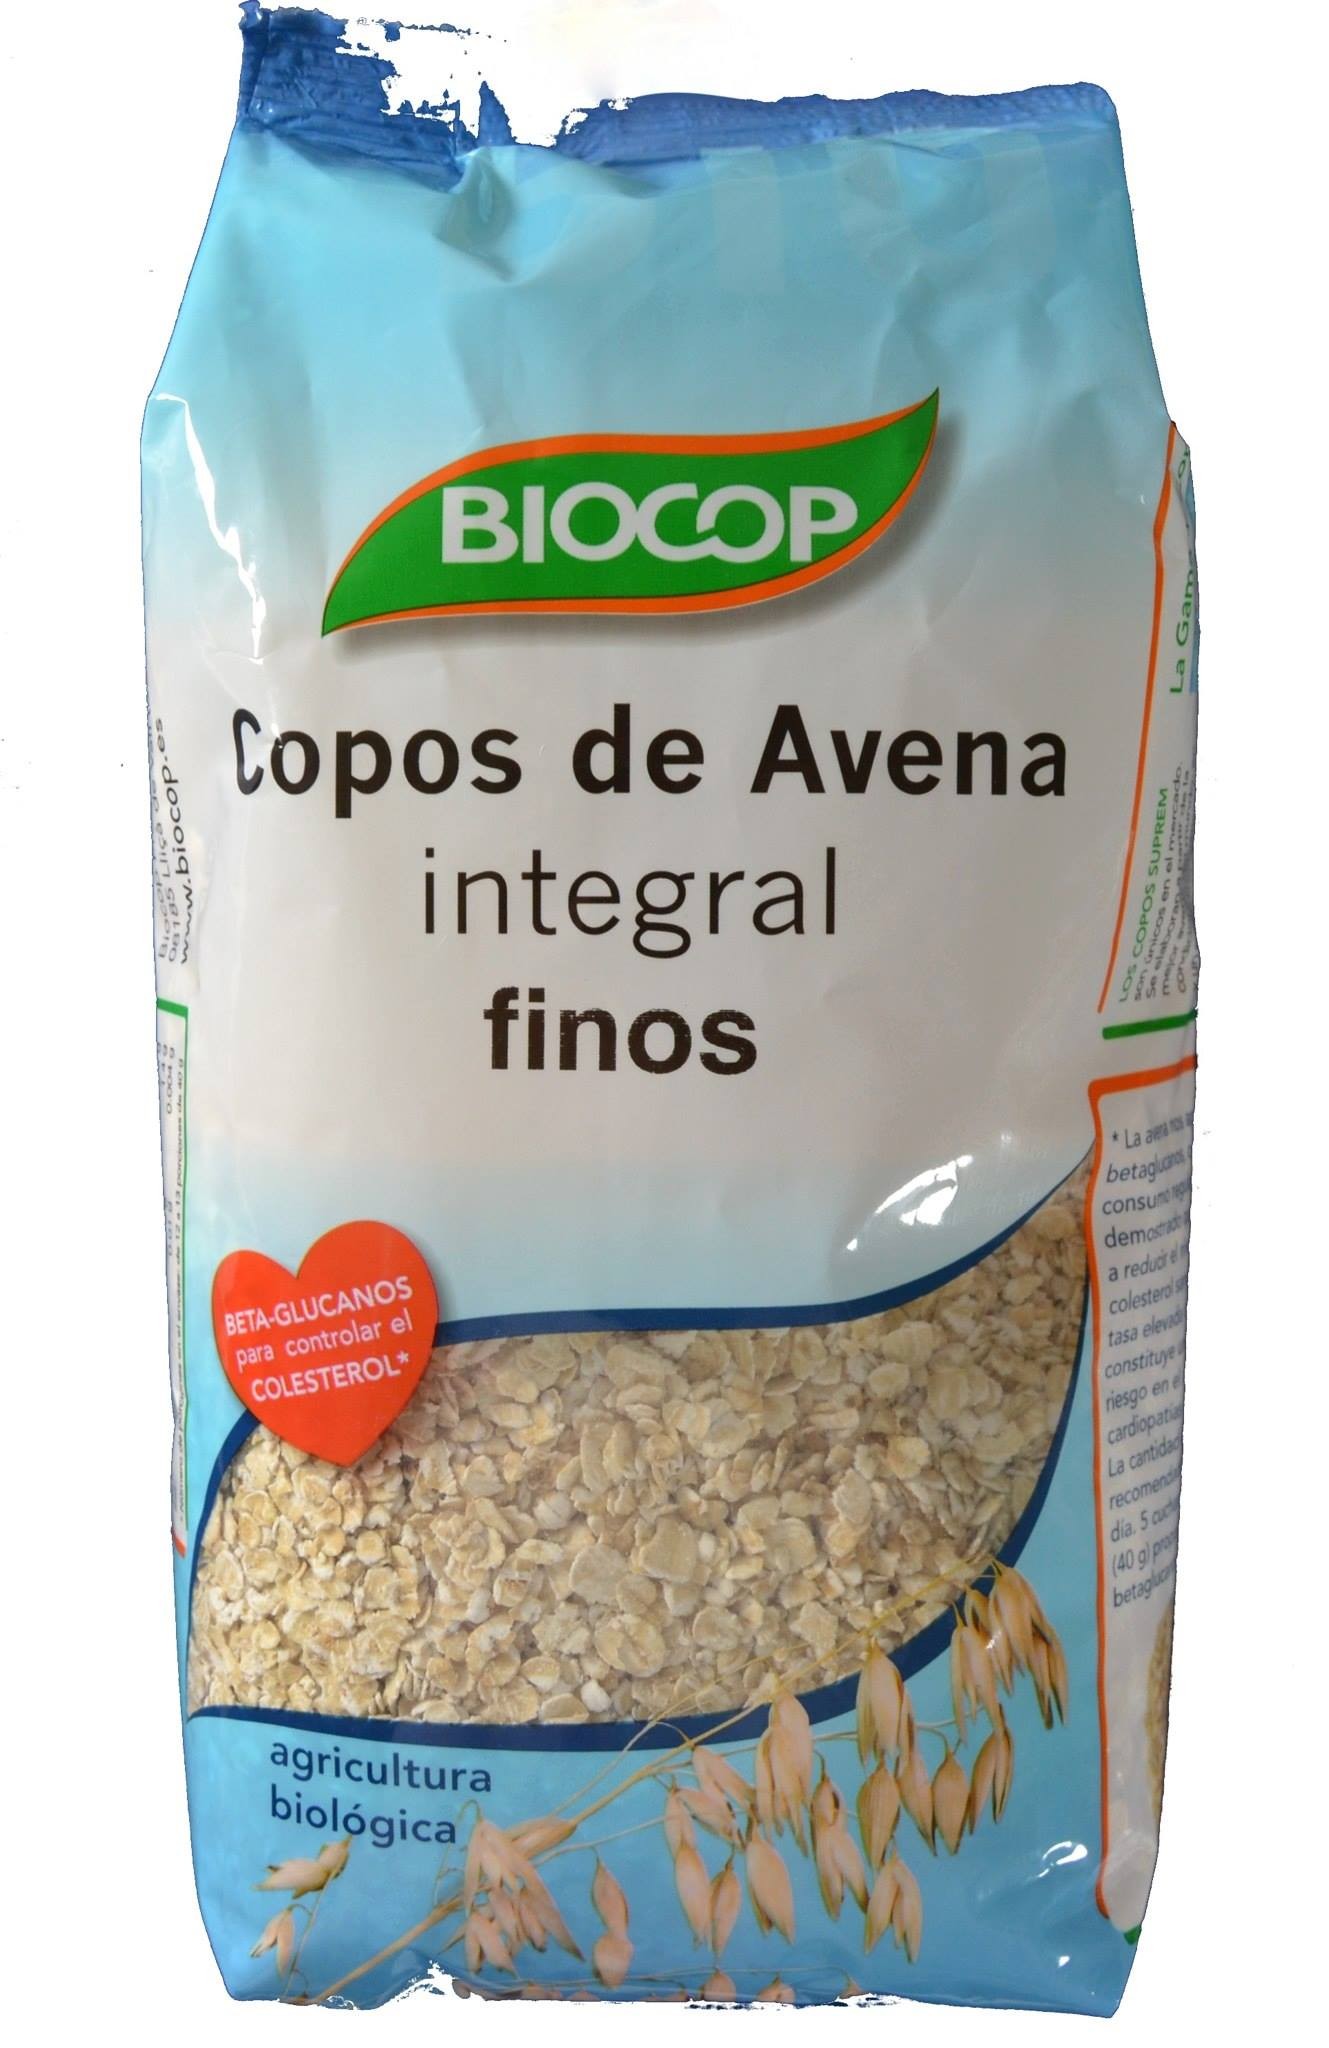 COPOS FINOS DE AVENA INTEGRAL 500G BIOCOP - Farmacia Anna Riba